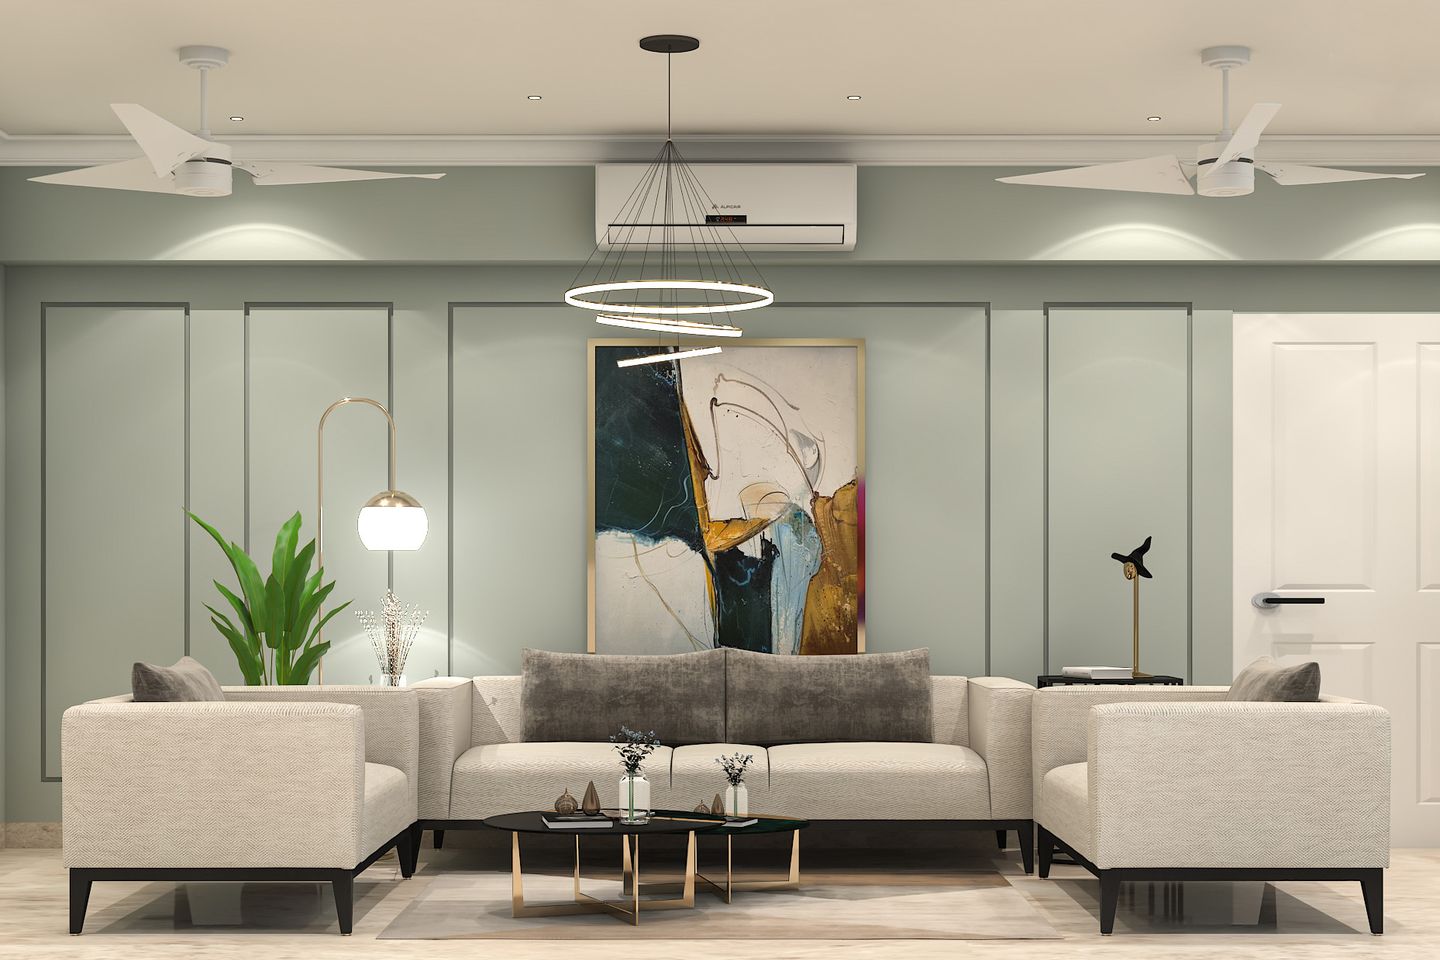 Living Room Design With Beige And Grey Tuxedo Sofas - Livspace